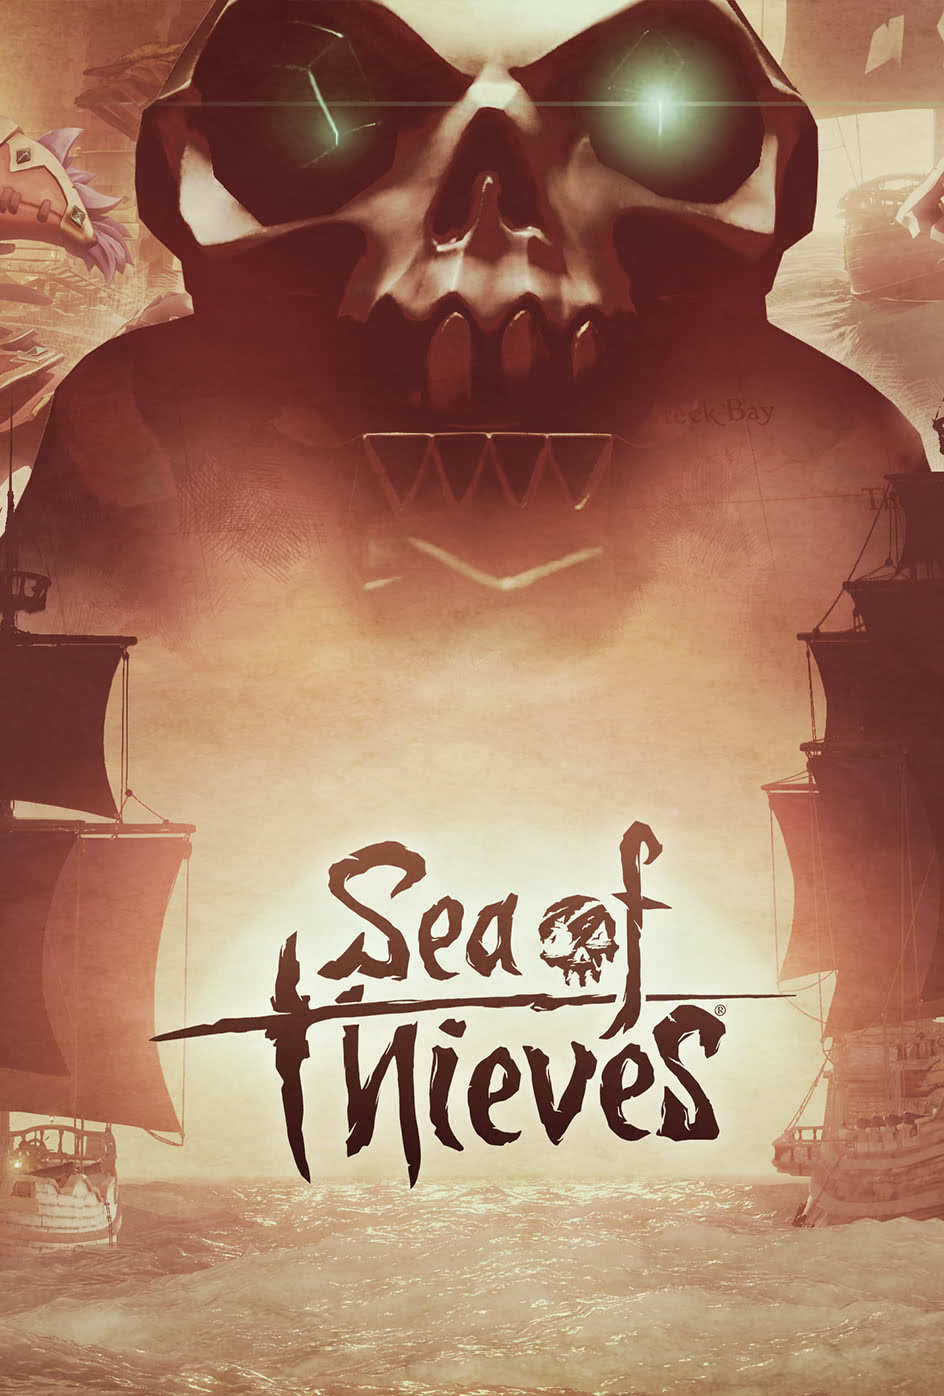 sea of thieves steam